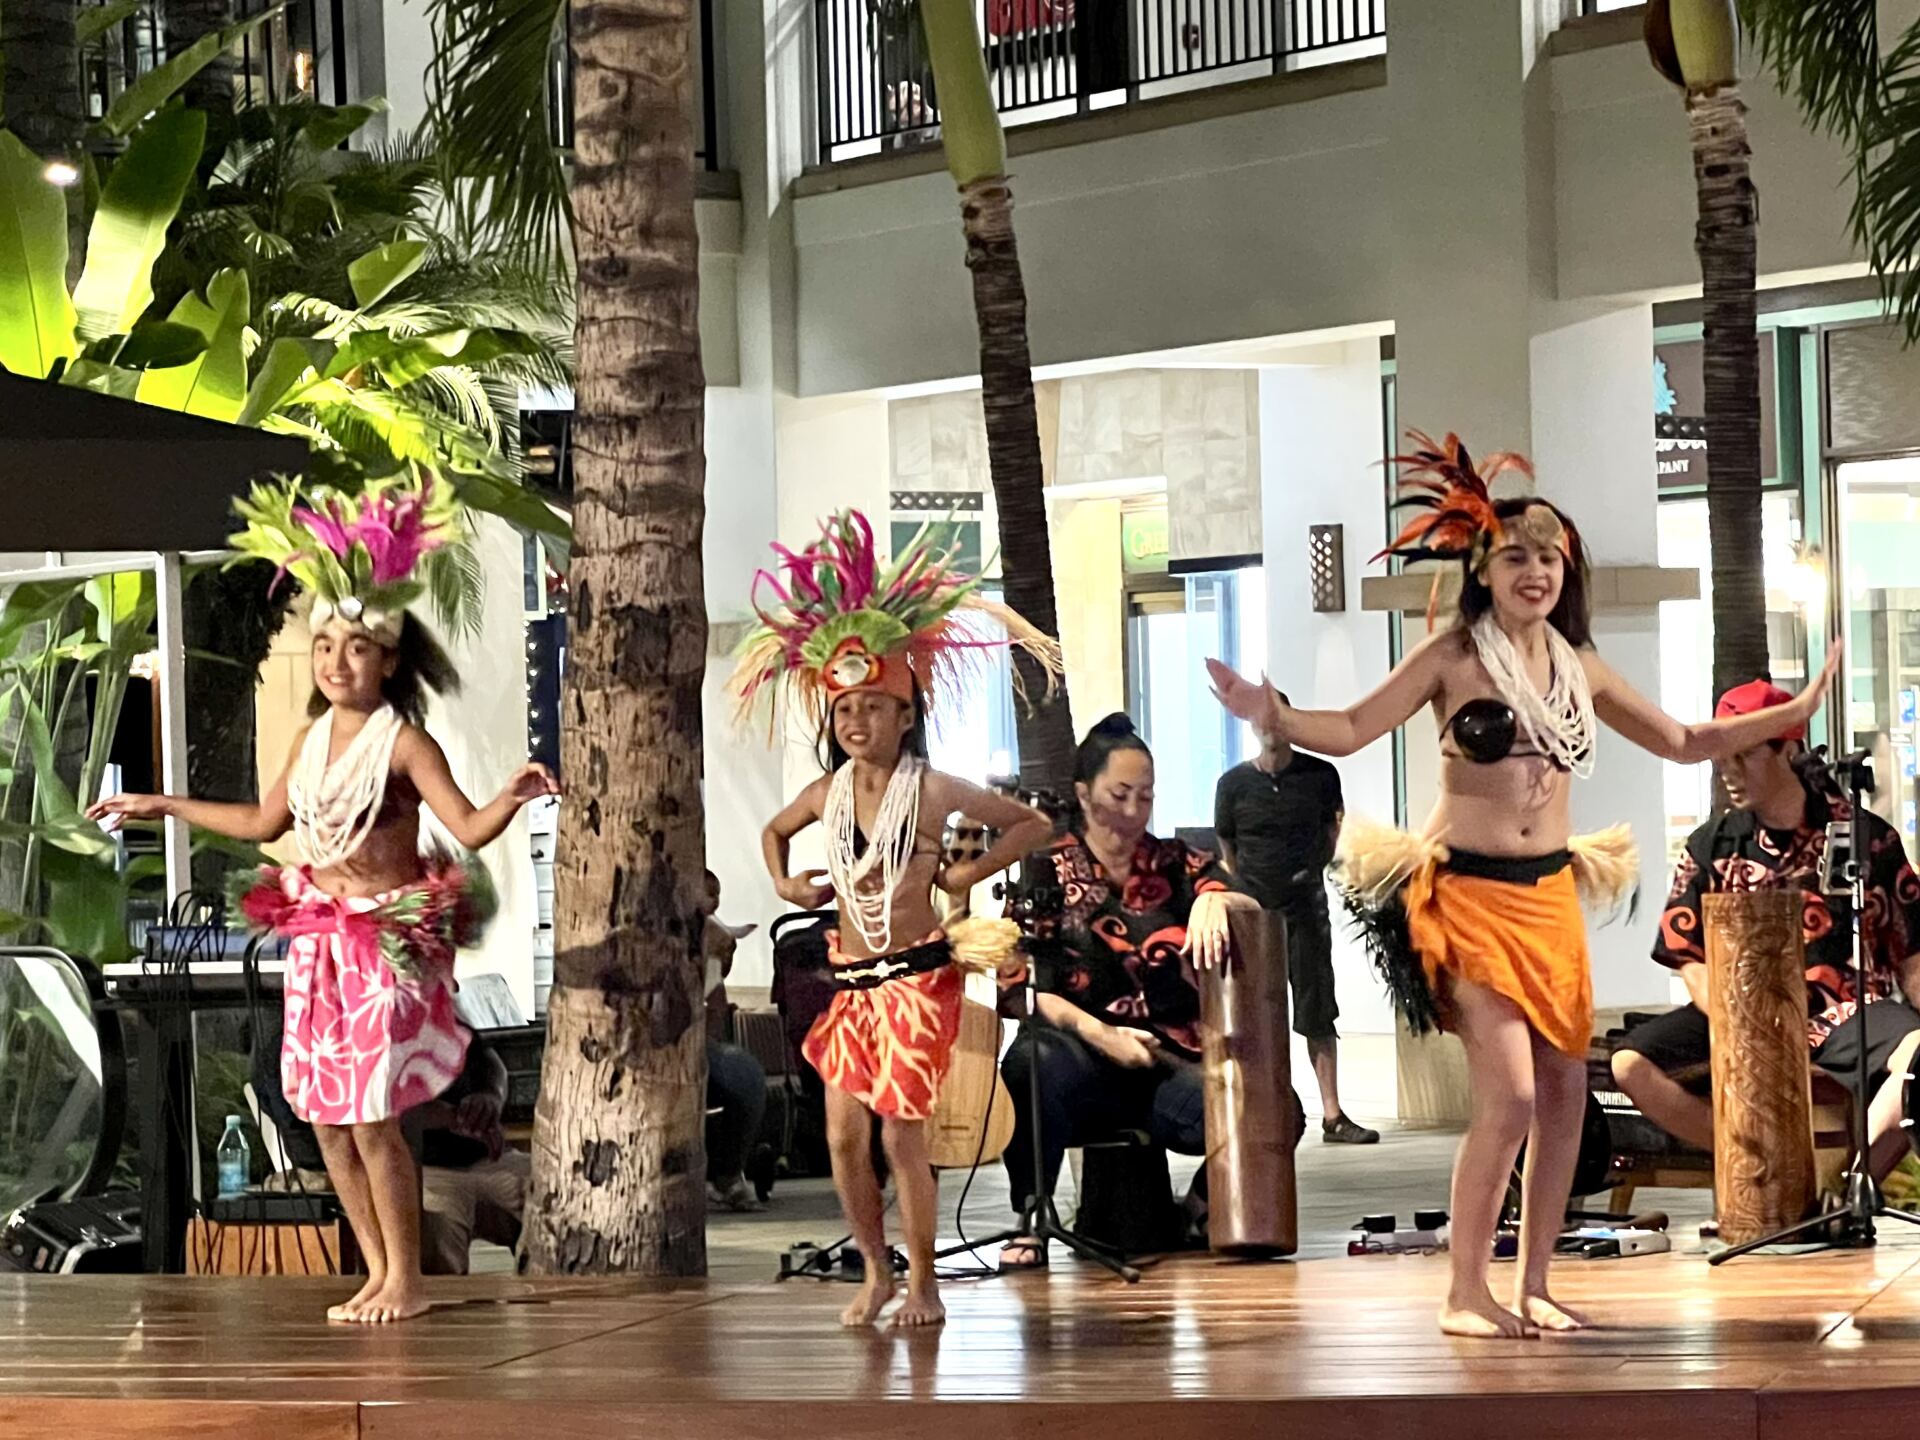 The Polynesian Show at the Shops of Wailea, Maui, Hawaii. JIM BYERS PHOTO